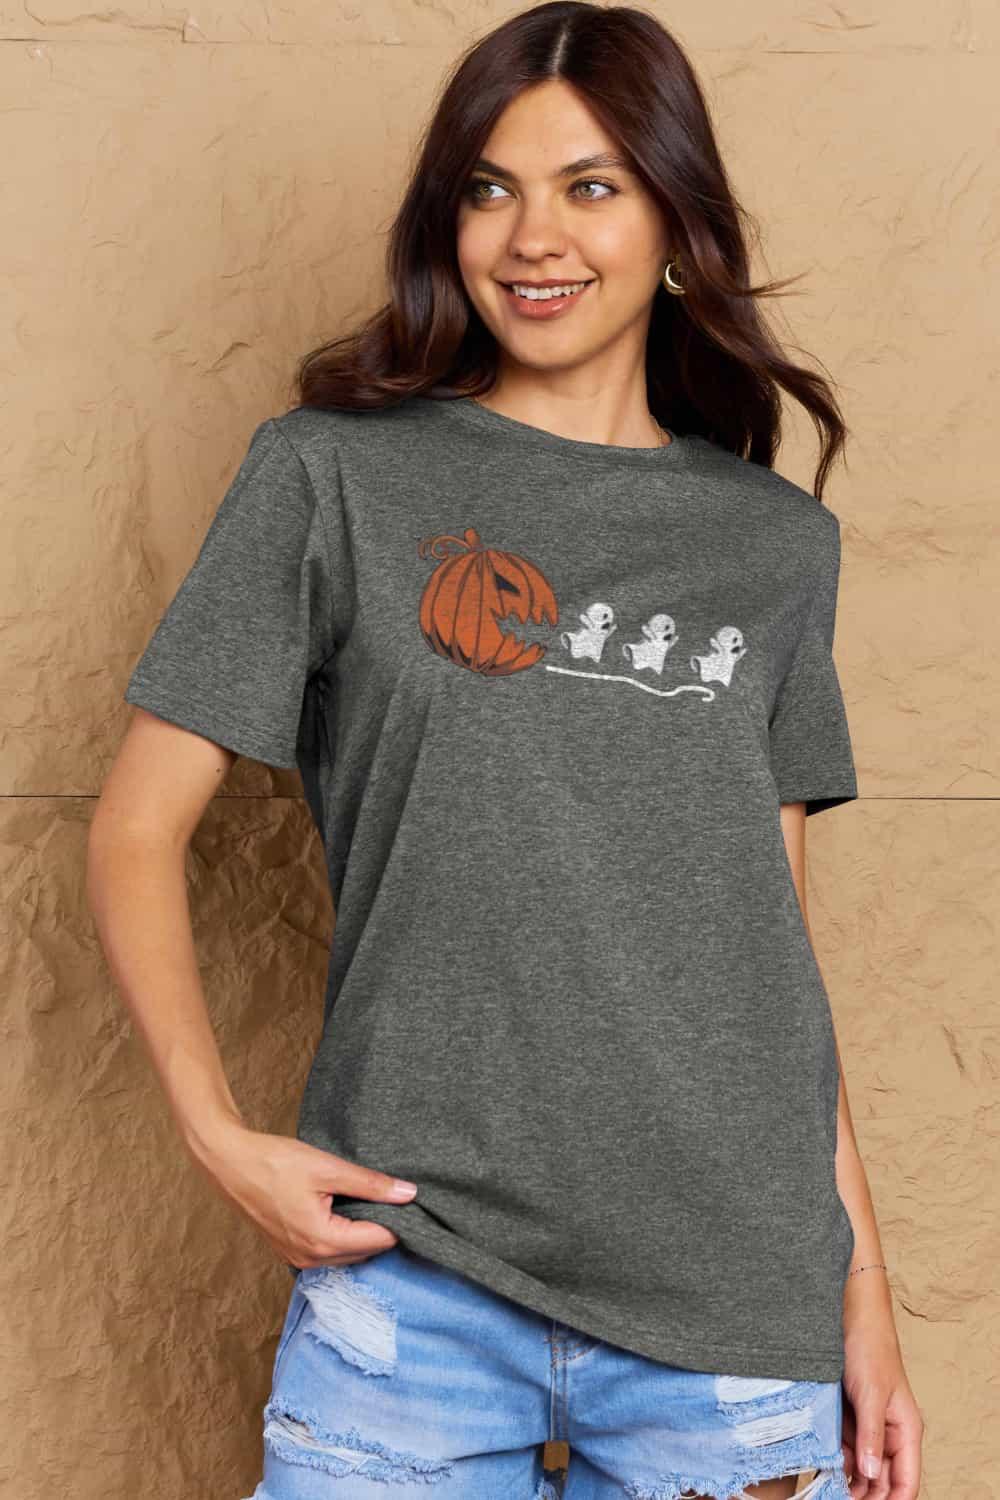 Simply Love Full Size Jack-O'-Lantern Graphic Cotton T-Shirt - Vesteeto